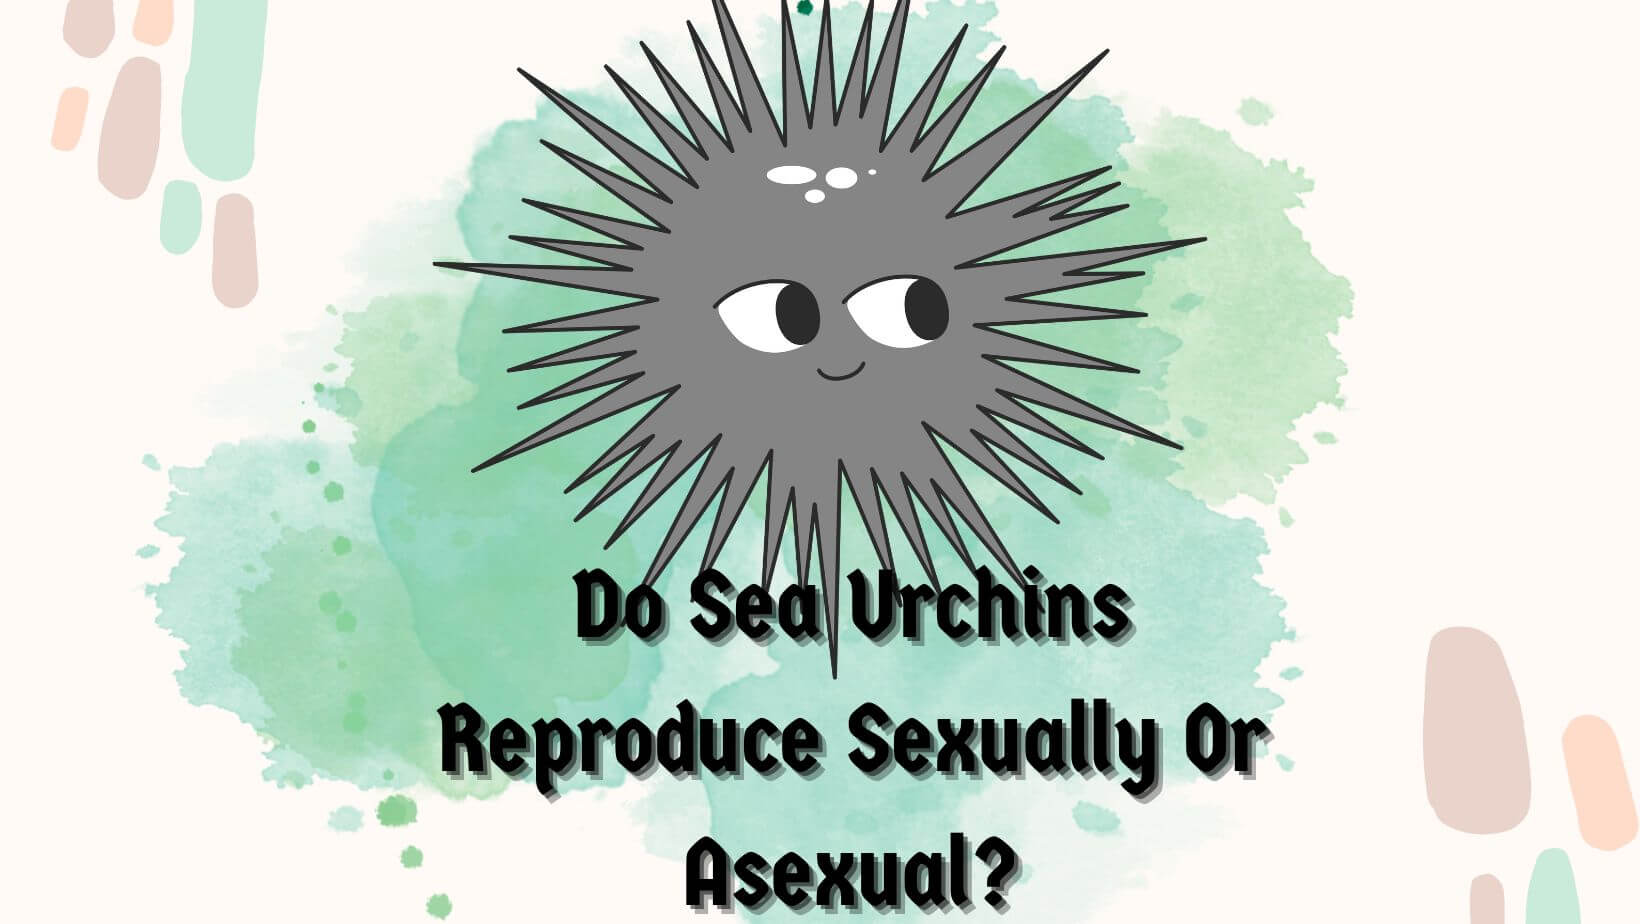 Do Sea Urchins Reproduce Sexually or Asexually?